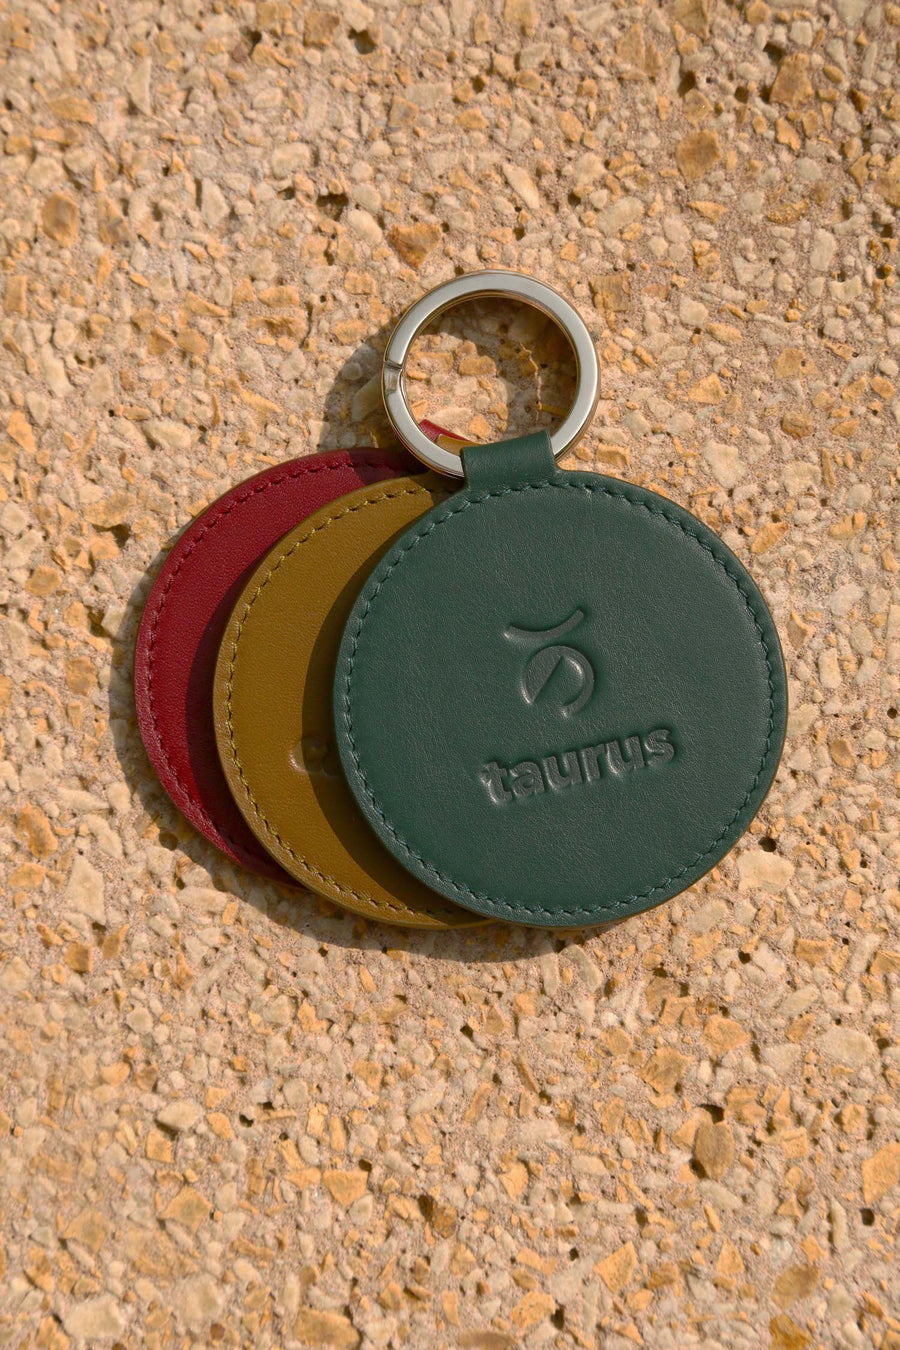 DOOZ Taurus, Virgo, Capricorn keychains small leather goods handmade